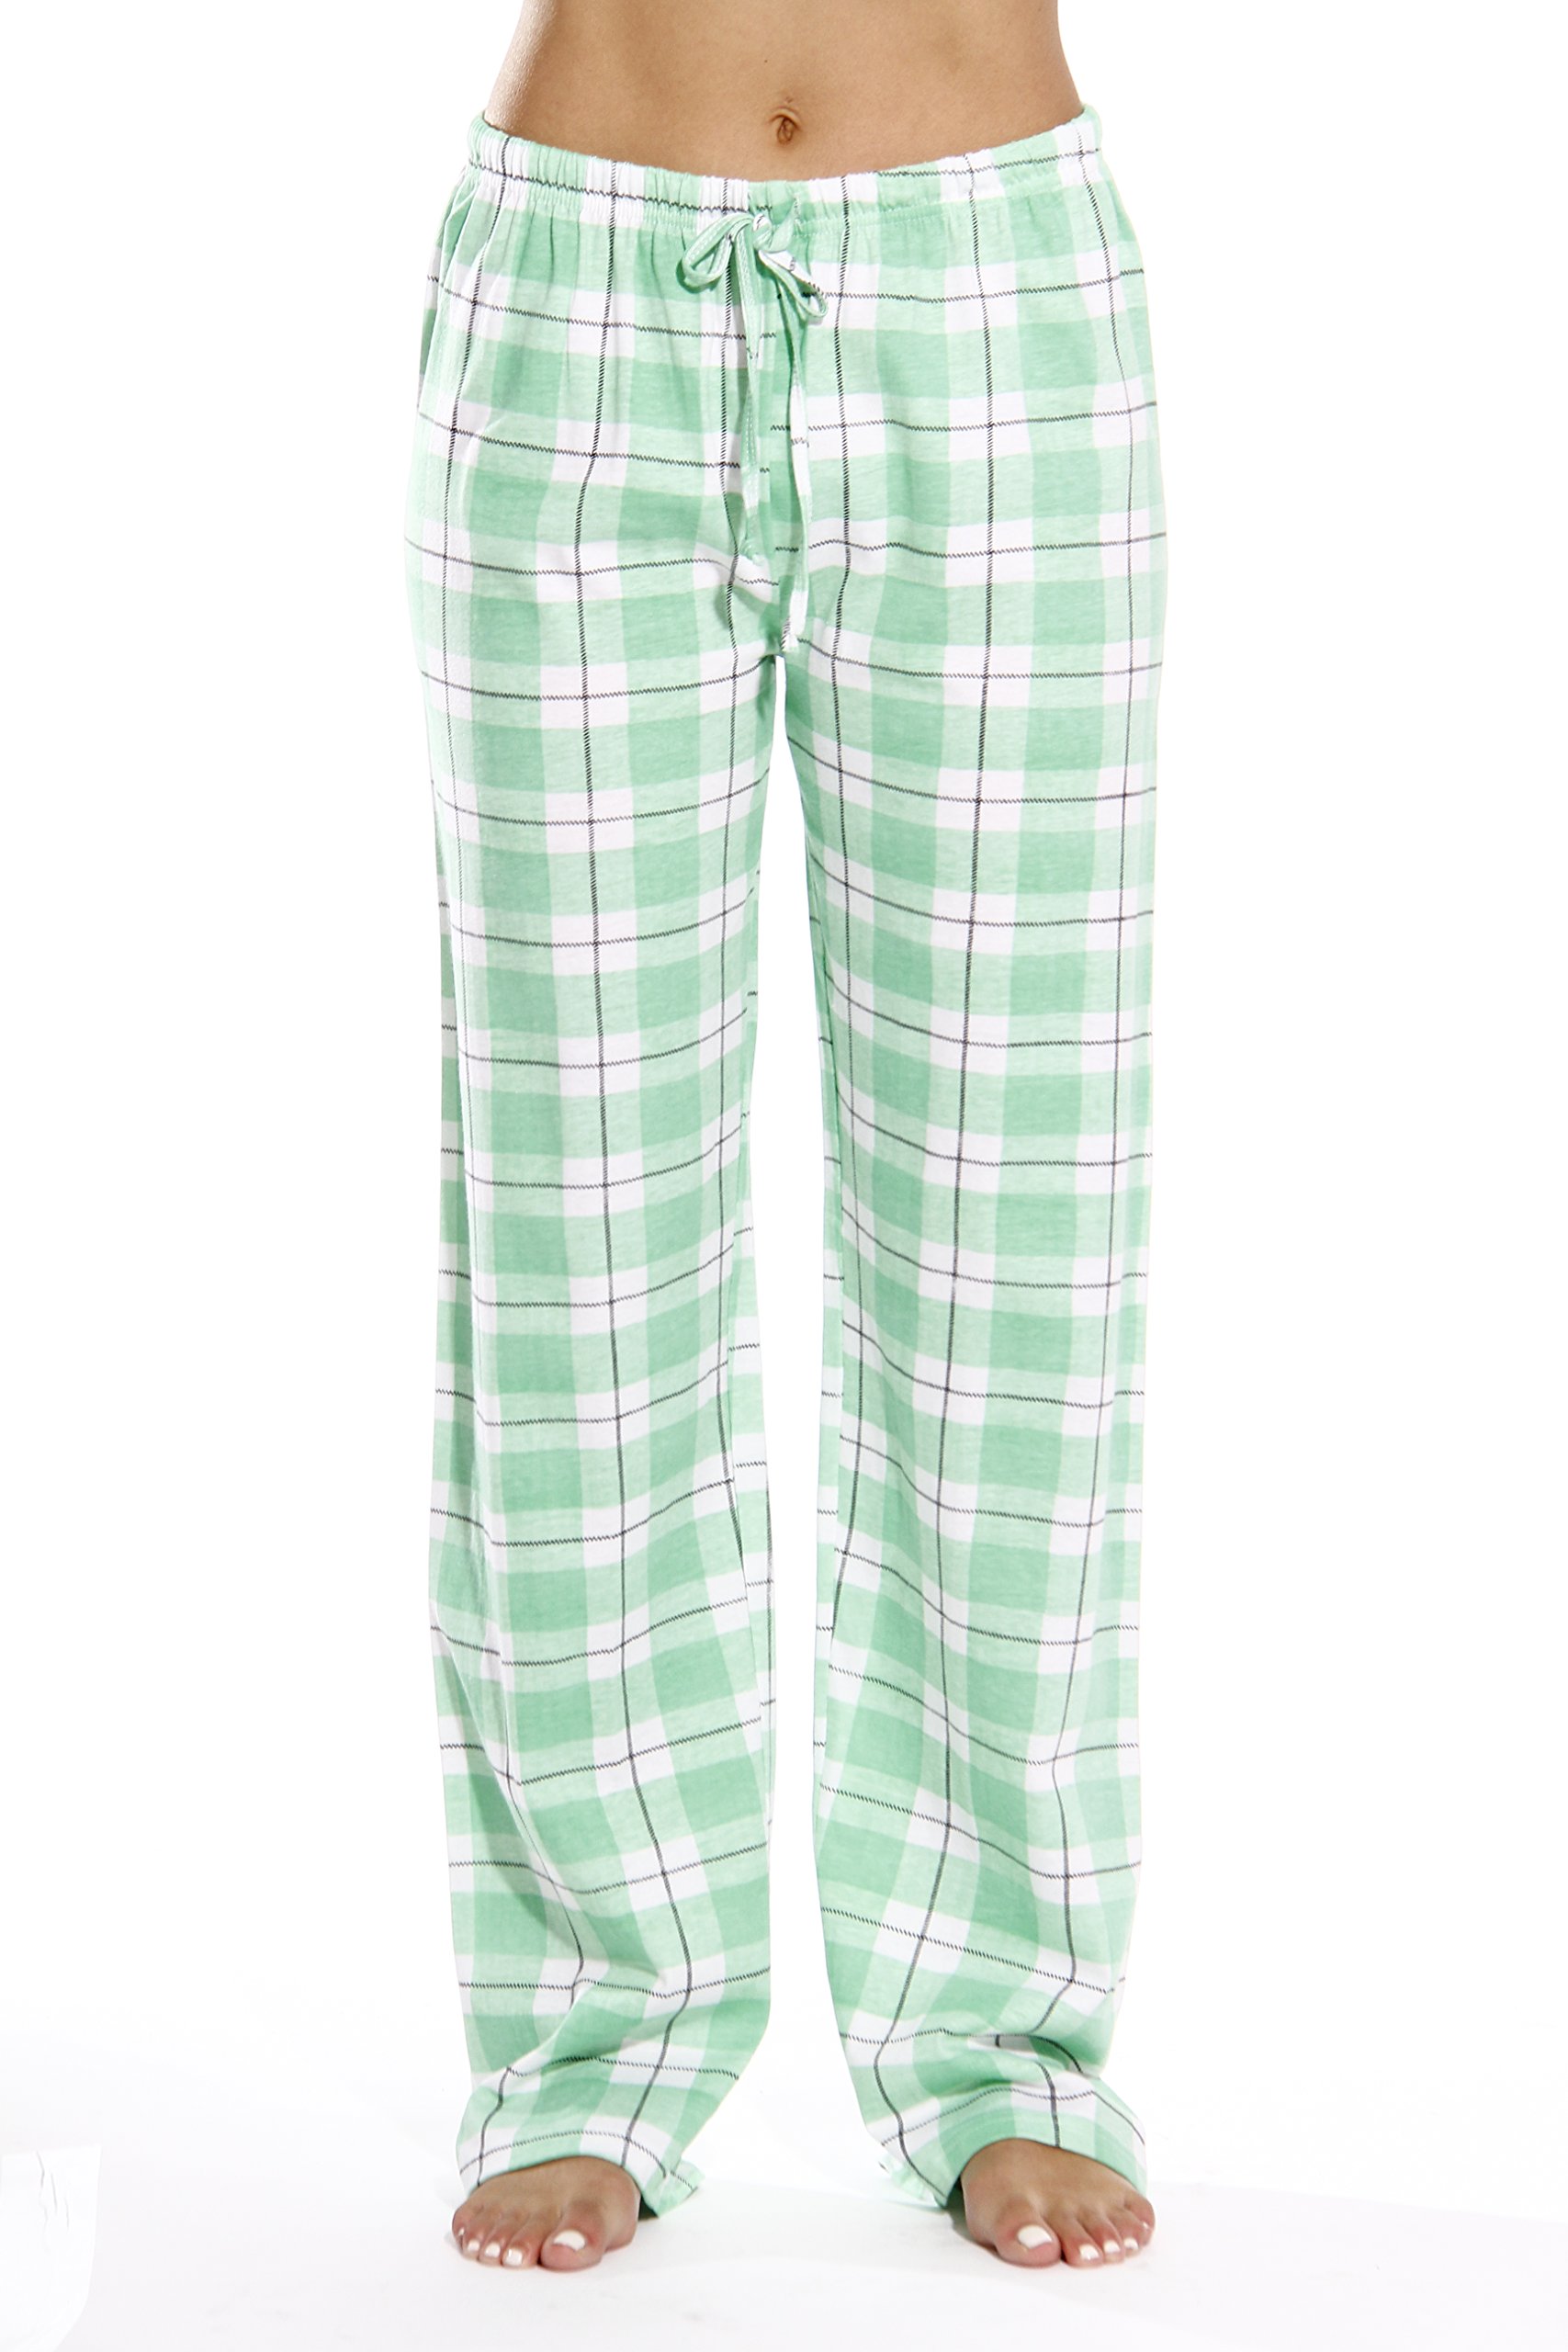 Just Love 100% Cotton Women's Capri Pajama Pants Sleepwear - Comfortable  and Stylish (Pink Plaid, Small)